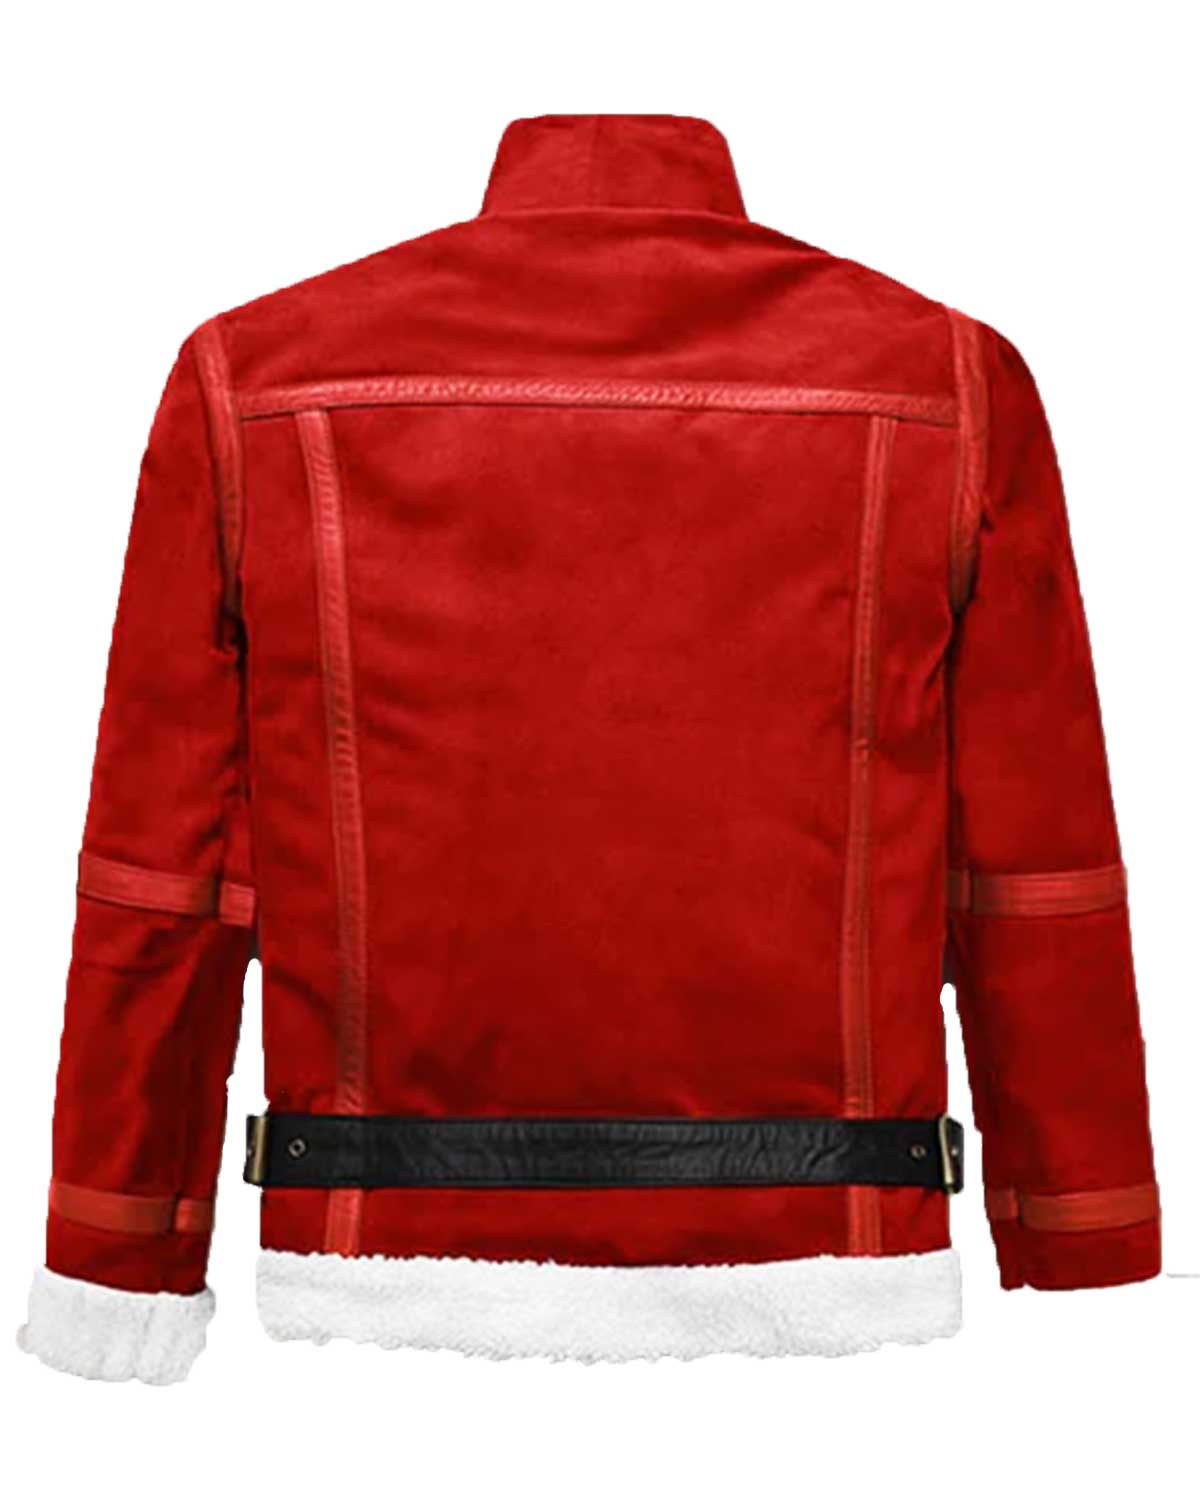 Mens Ryan Reynolds Spirited Red Leather Jacket | Elite Jacket